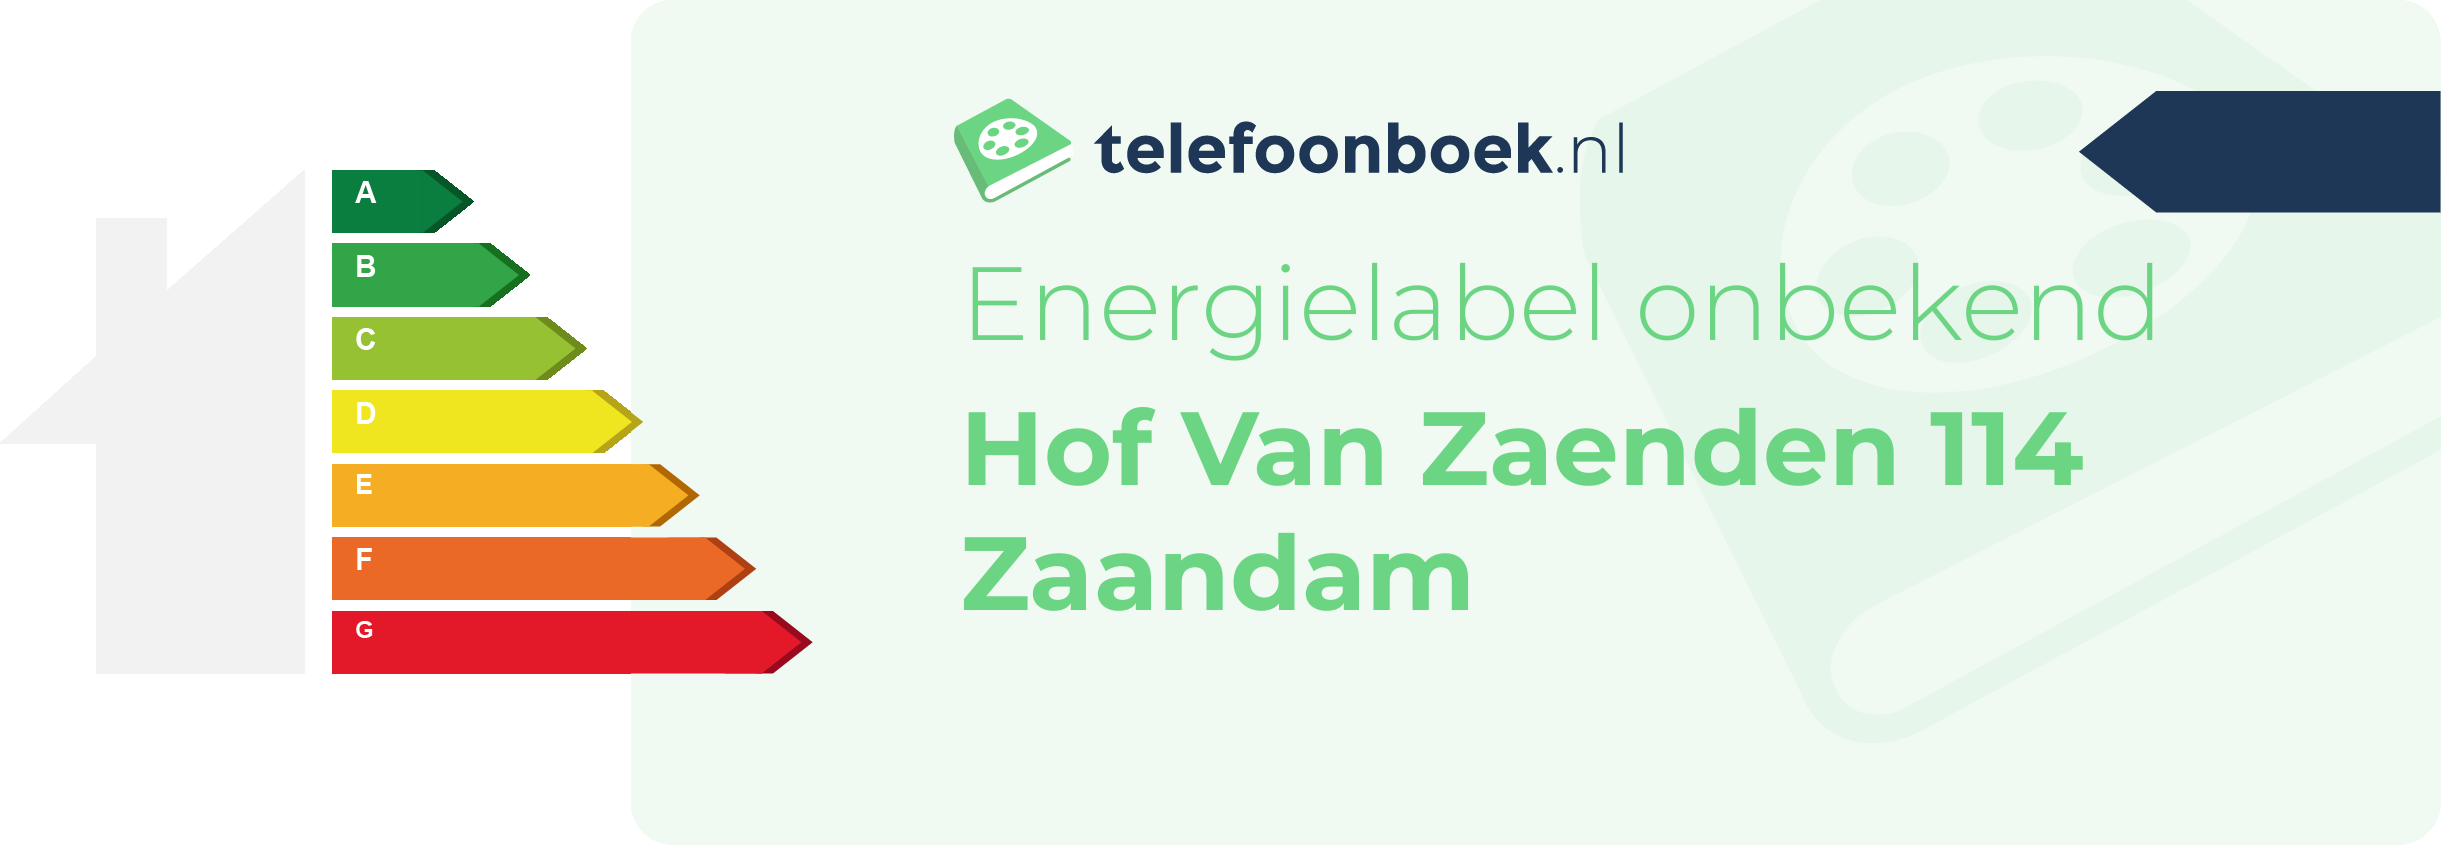 Energielabel Hof Van Zaenden 114 Zaandam